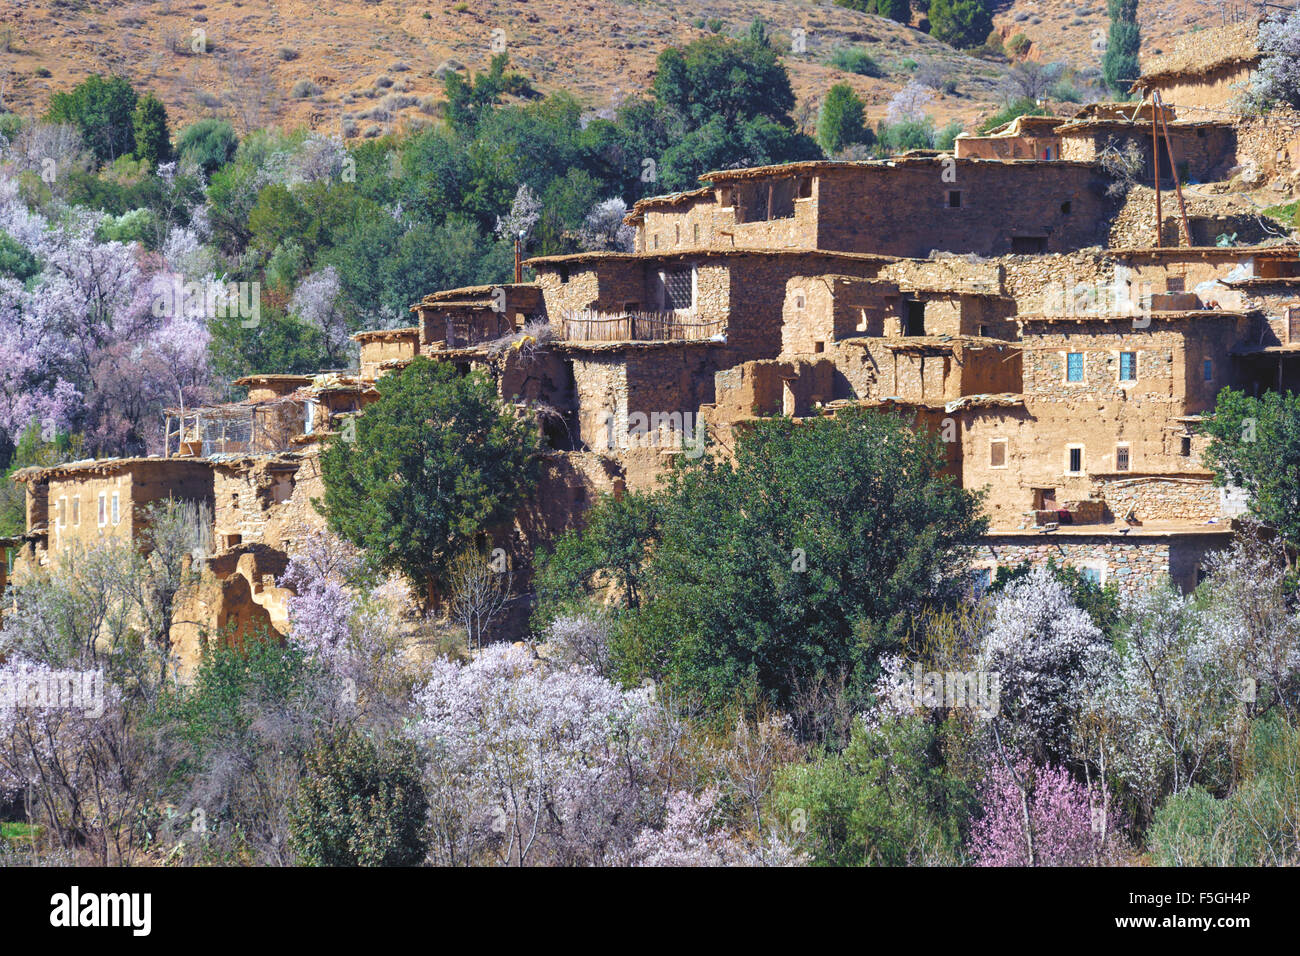 Dorf im hohen Atlasgebirge, Marokko. Stockfoto